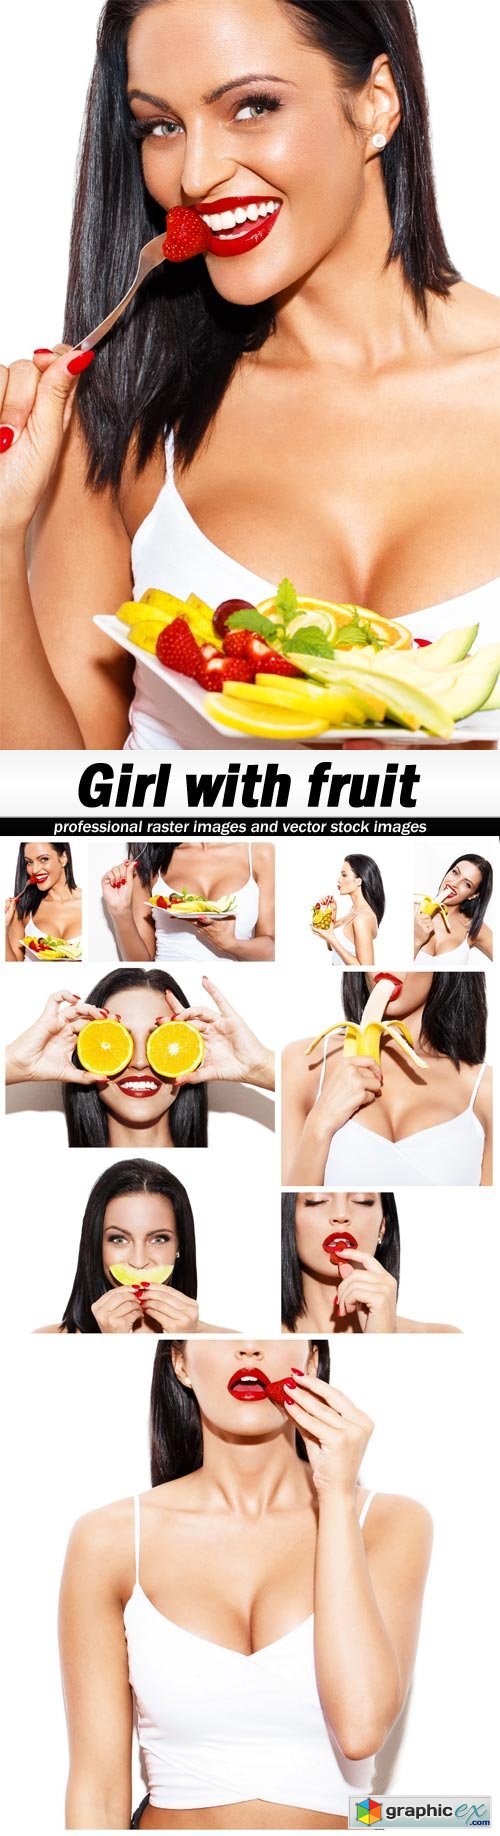 Girl with fruit - 9 UHQ JPEG